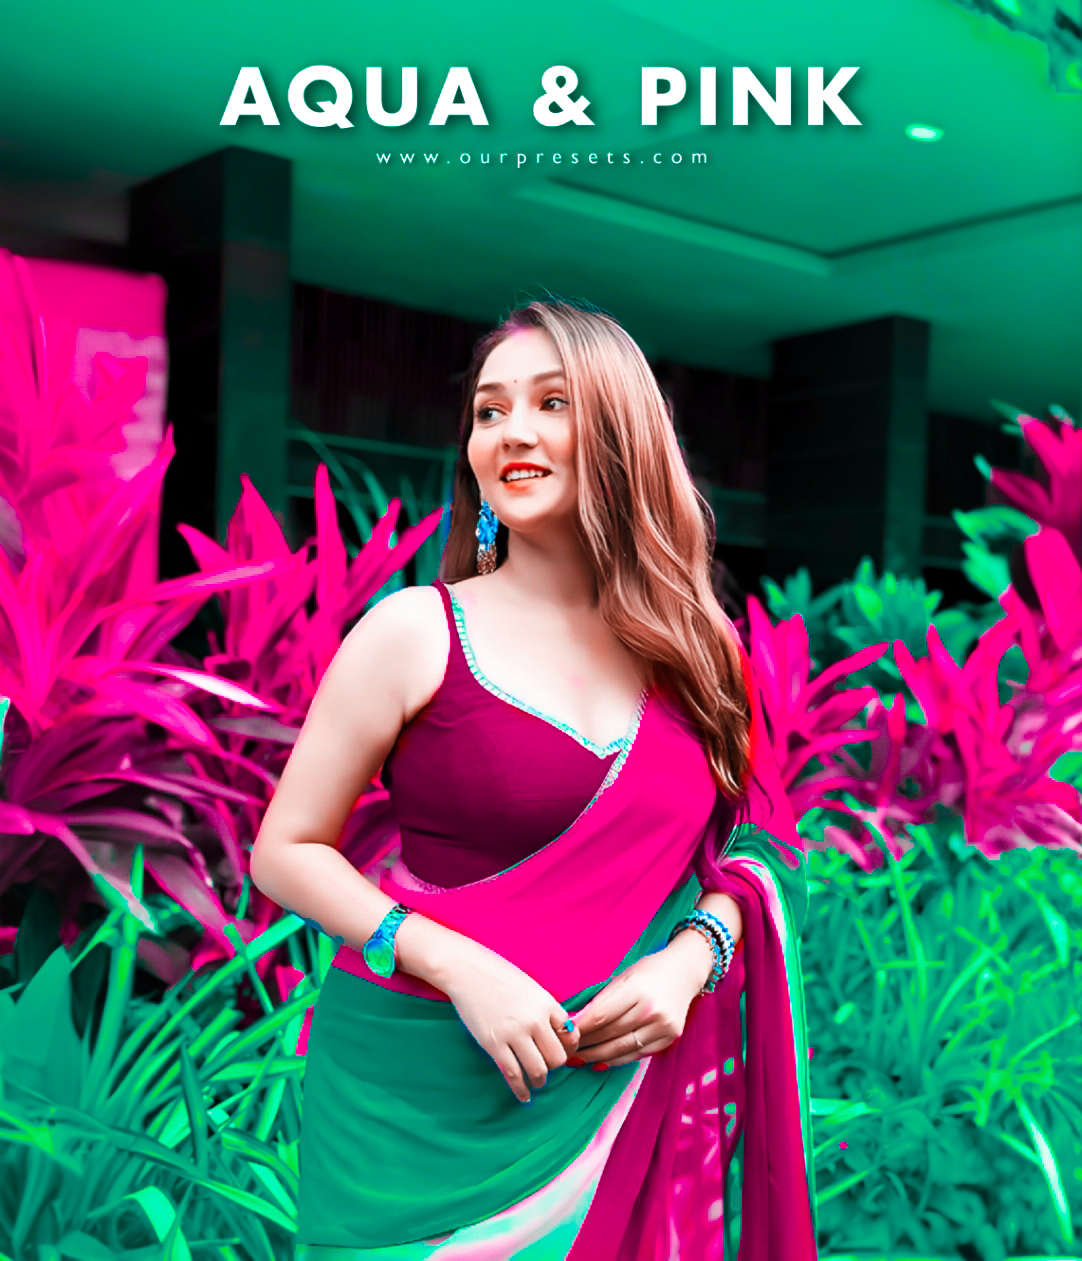 Aqua And Pink Lightroom Preset Download In One Click